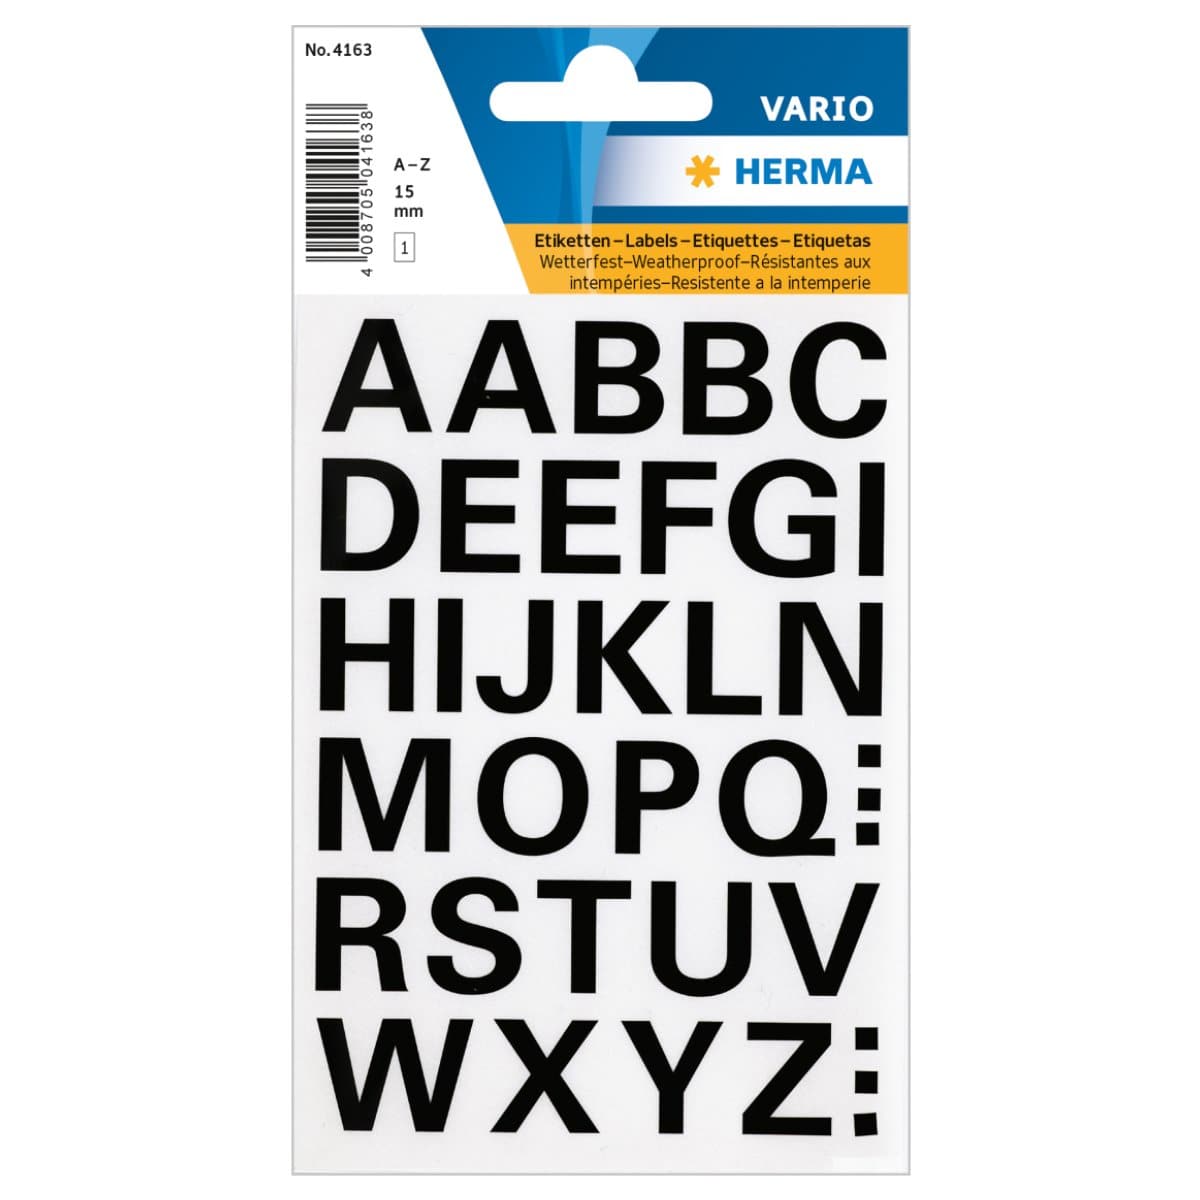 Herma Vario Sticker Letters A-Z, 15mm, weatherproof film, 1sheet/pack, Black